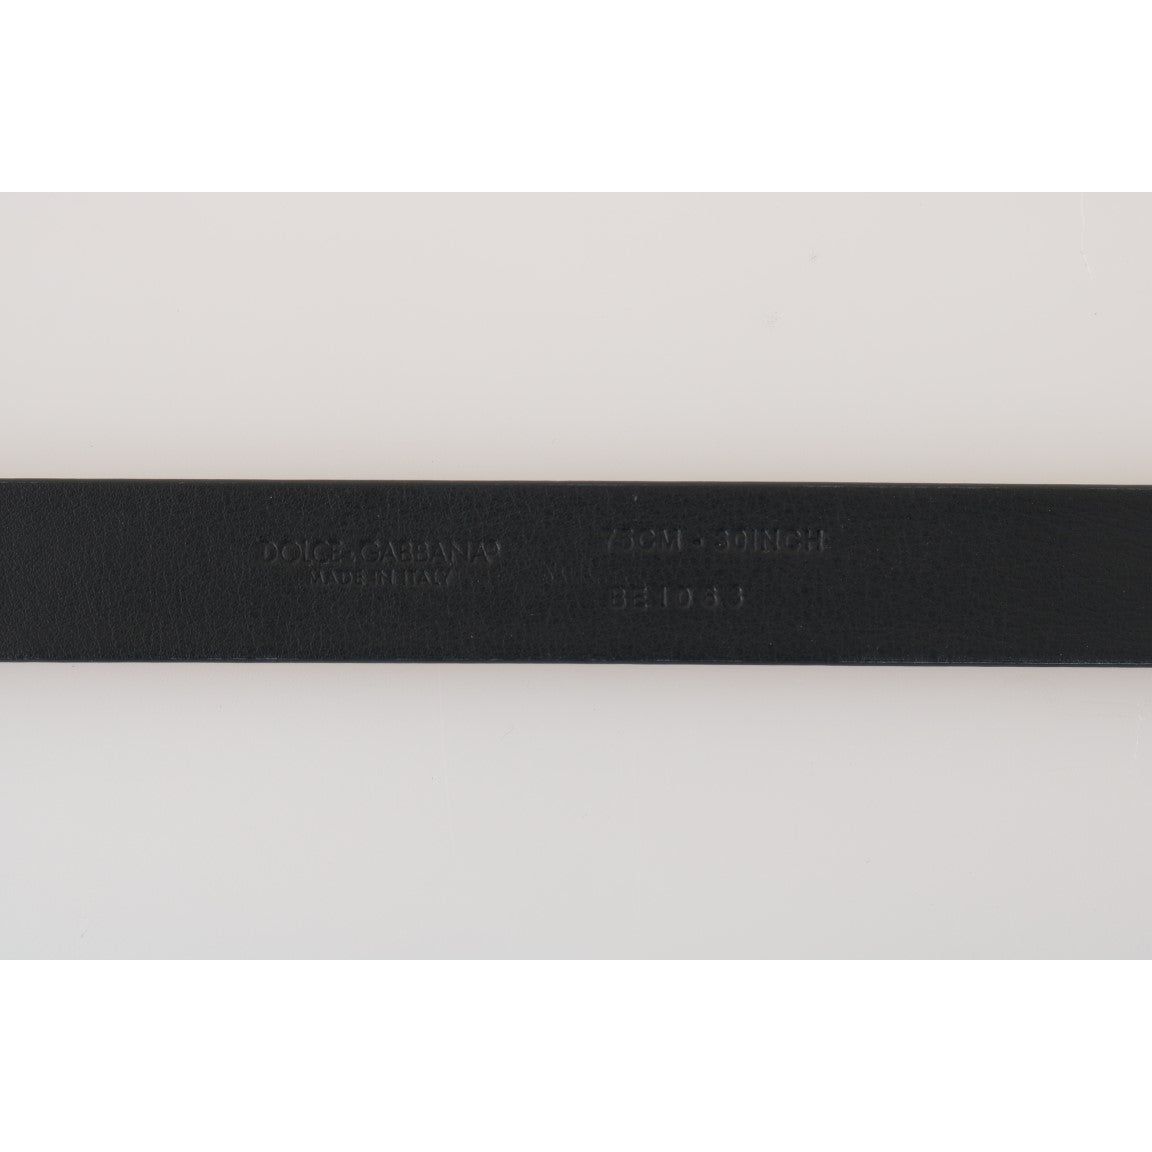 Dolce & Gabbana Elegant Chevron Leather Waist Belt Belt black-white-chevron-pattern-leather-belt 496158-black-white-chevron-pattern-leather-belt-3.jpg